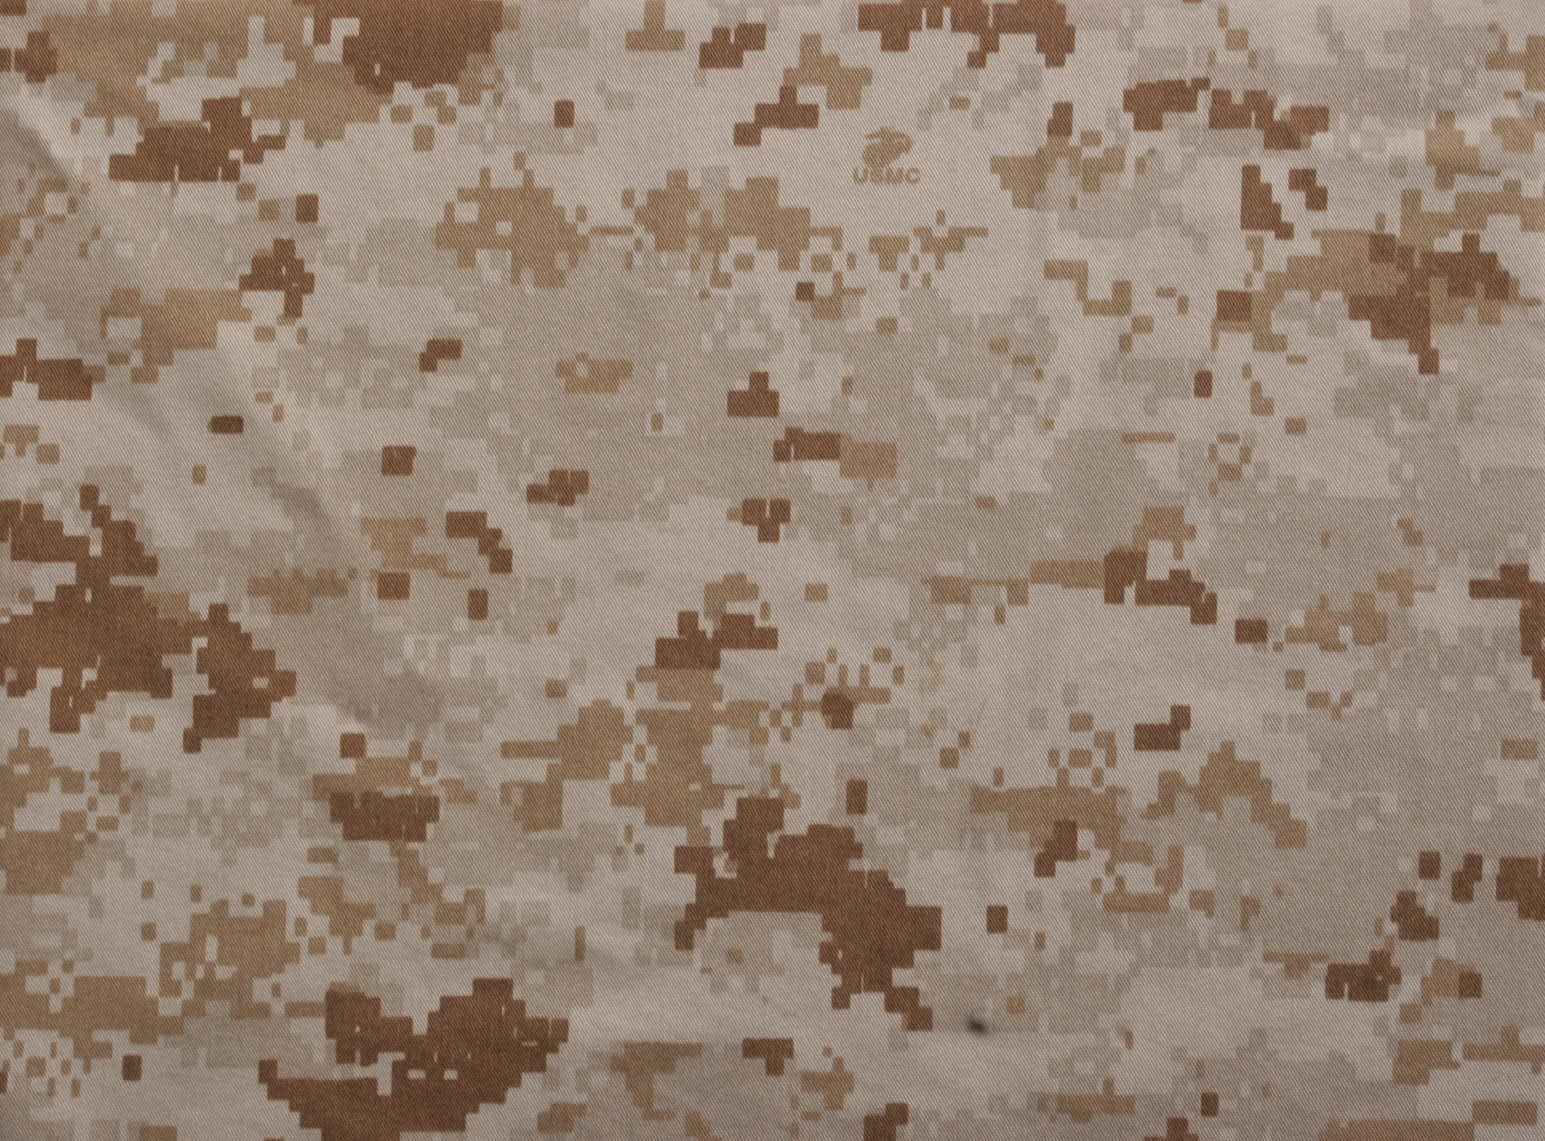 Marine Corps History  2002  Marpat Camouflage